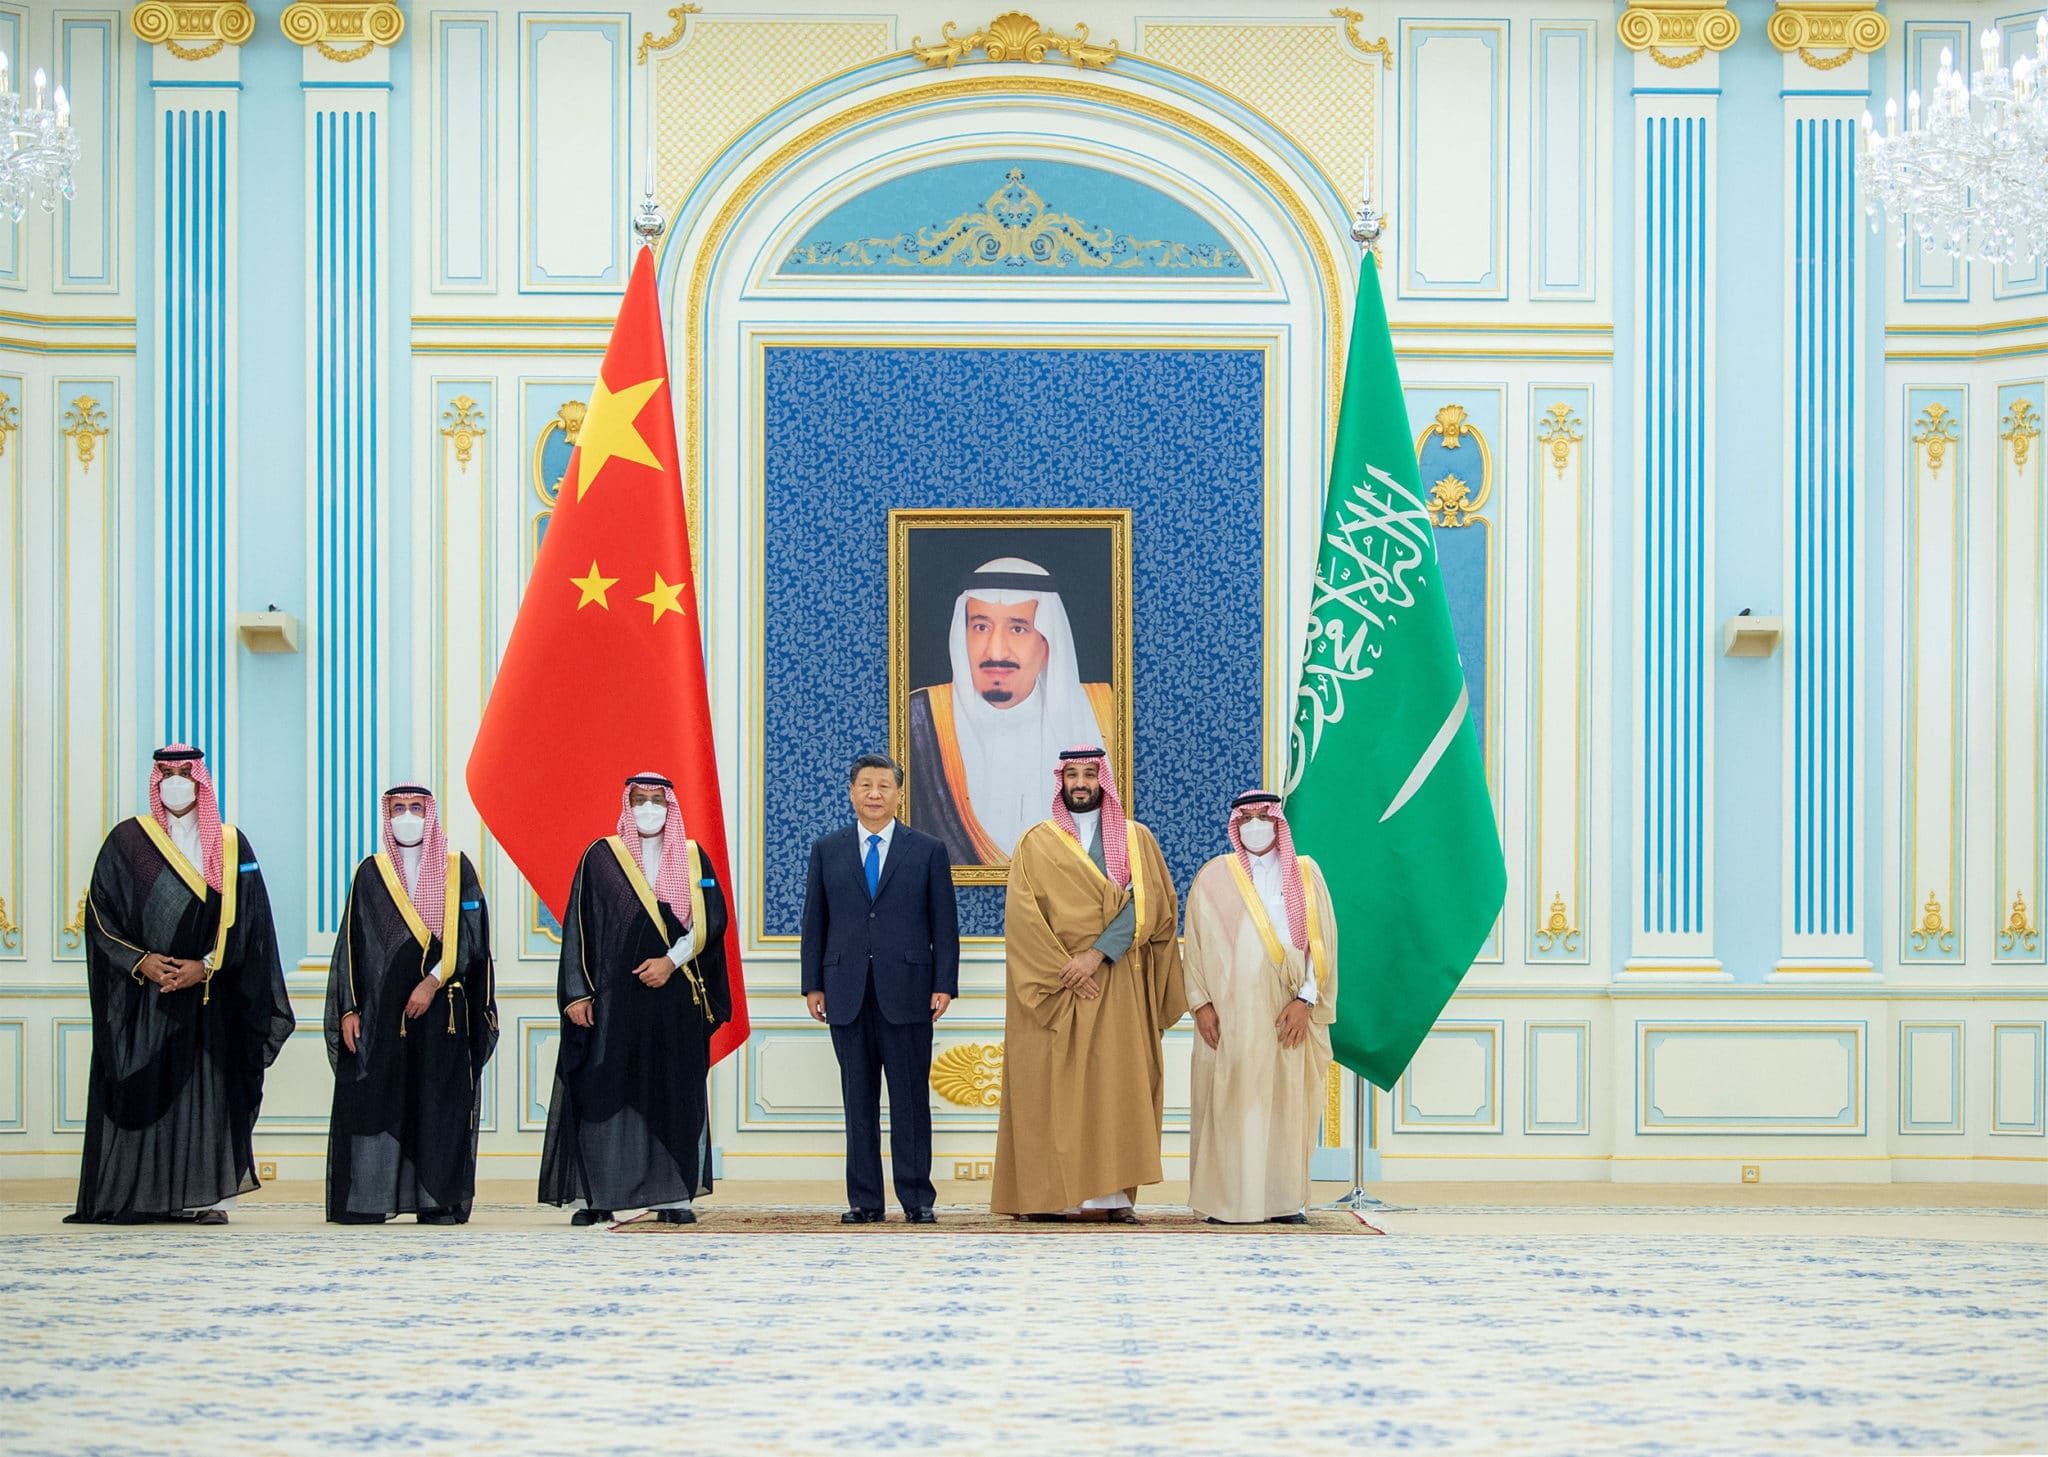 Saudi Arabia gathers China’s Xi with Arab leaders in ‘new era’ of ties